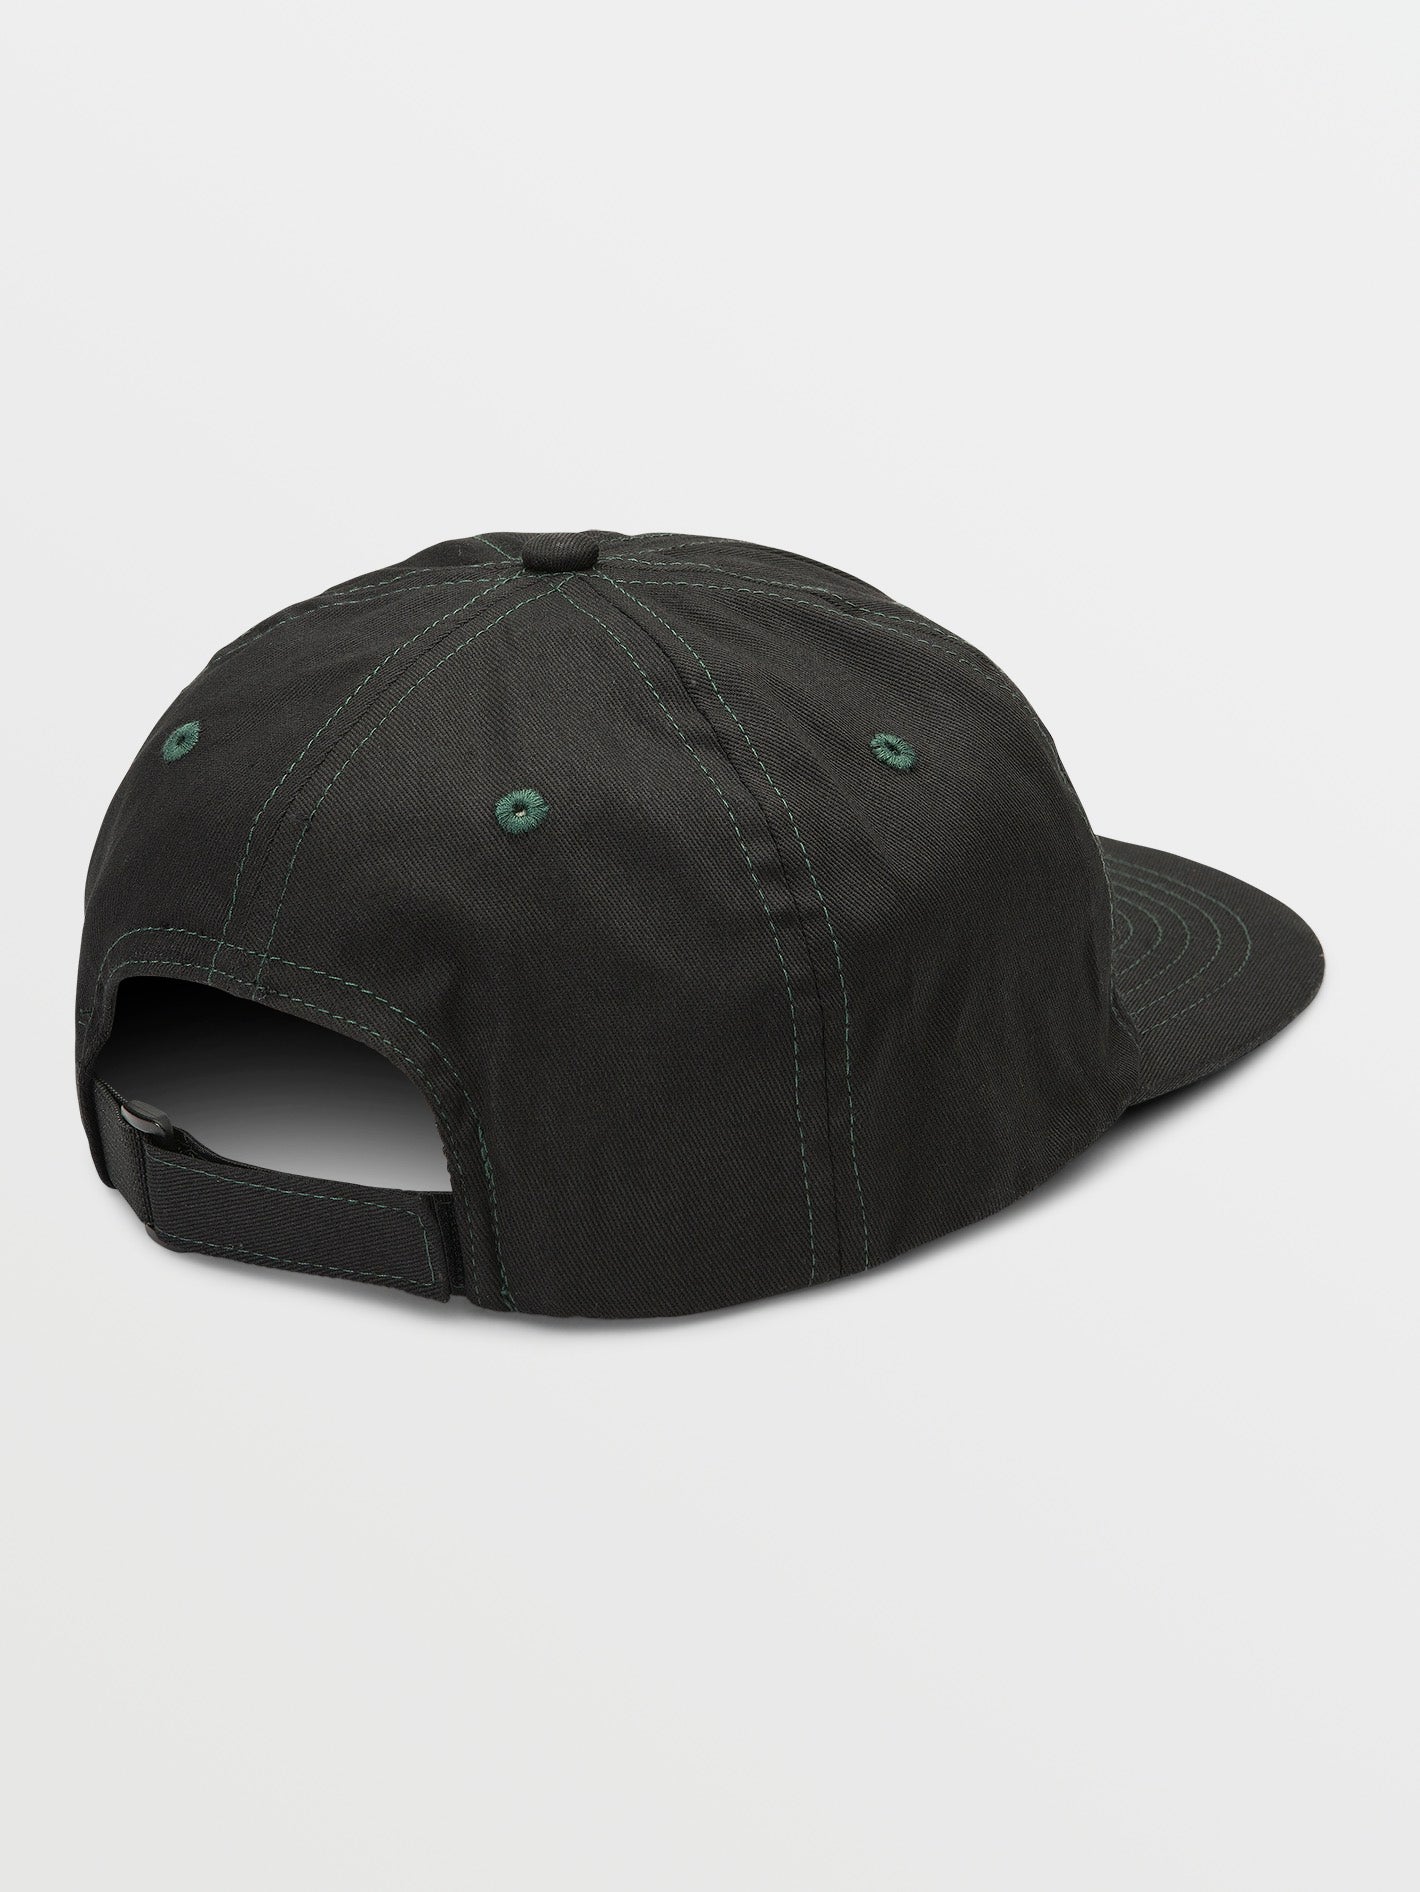 Volcom Ranso Adjustable Men's Hat, Black, Size O/S